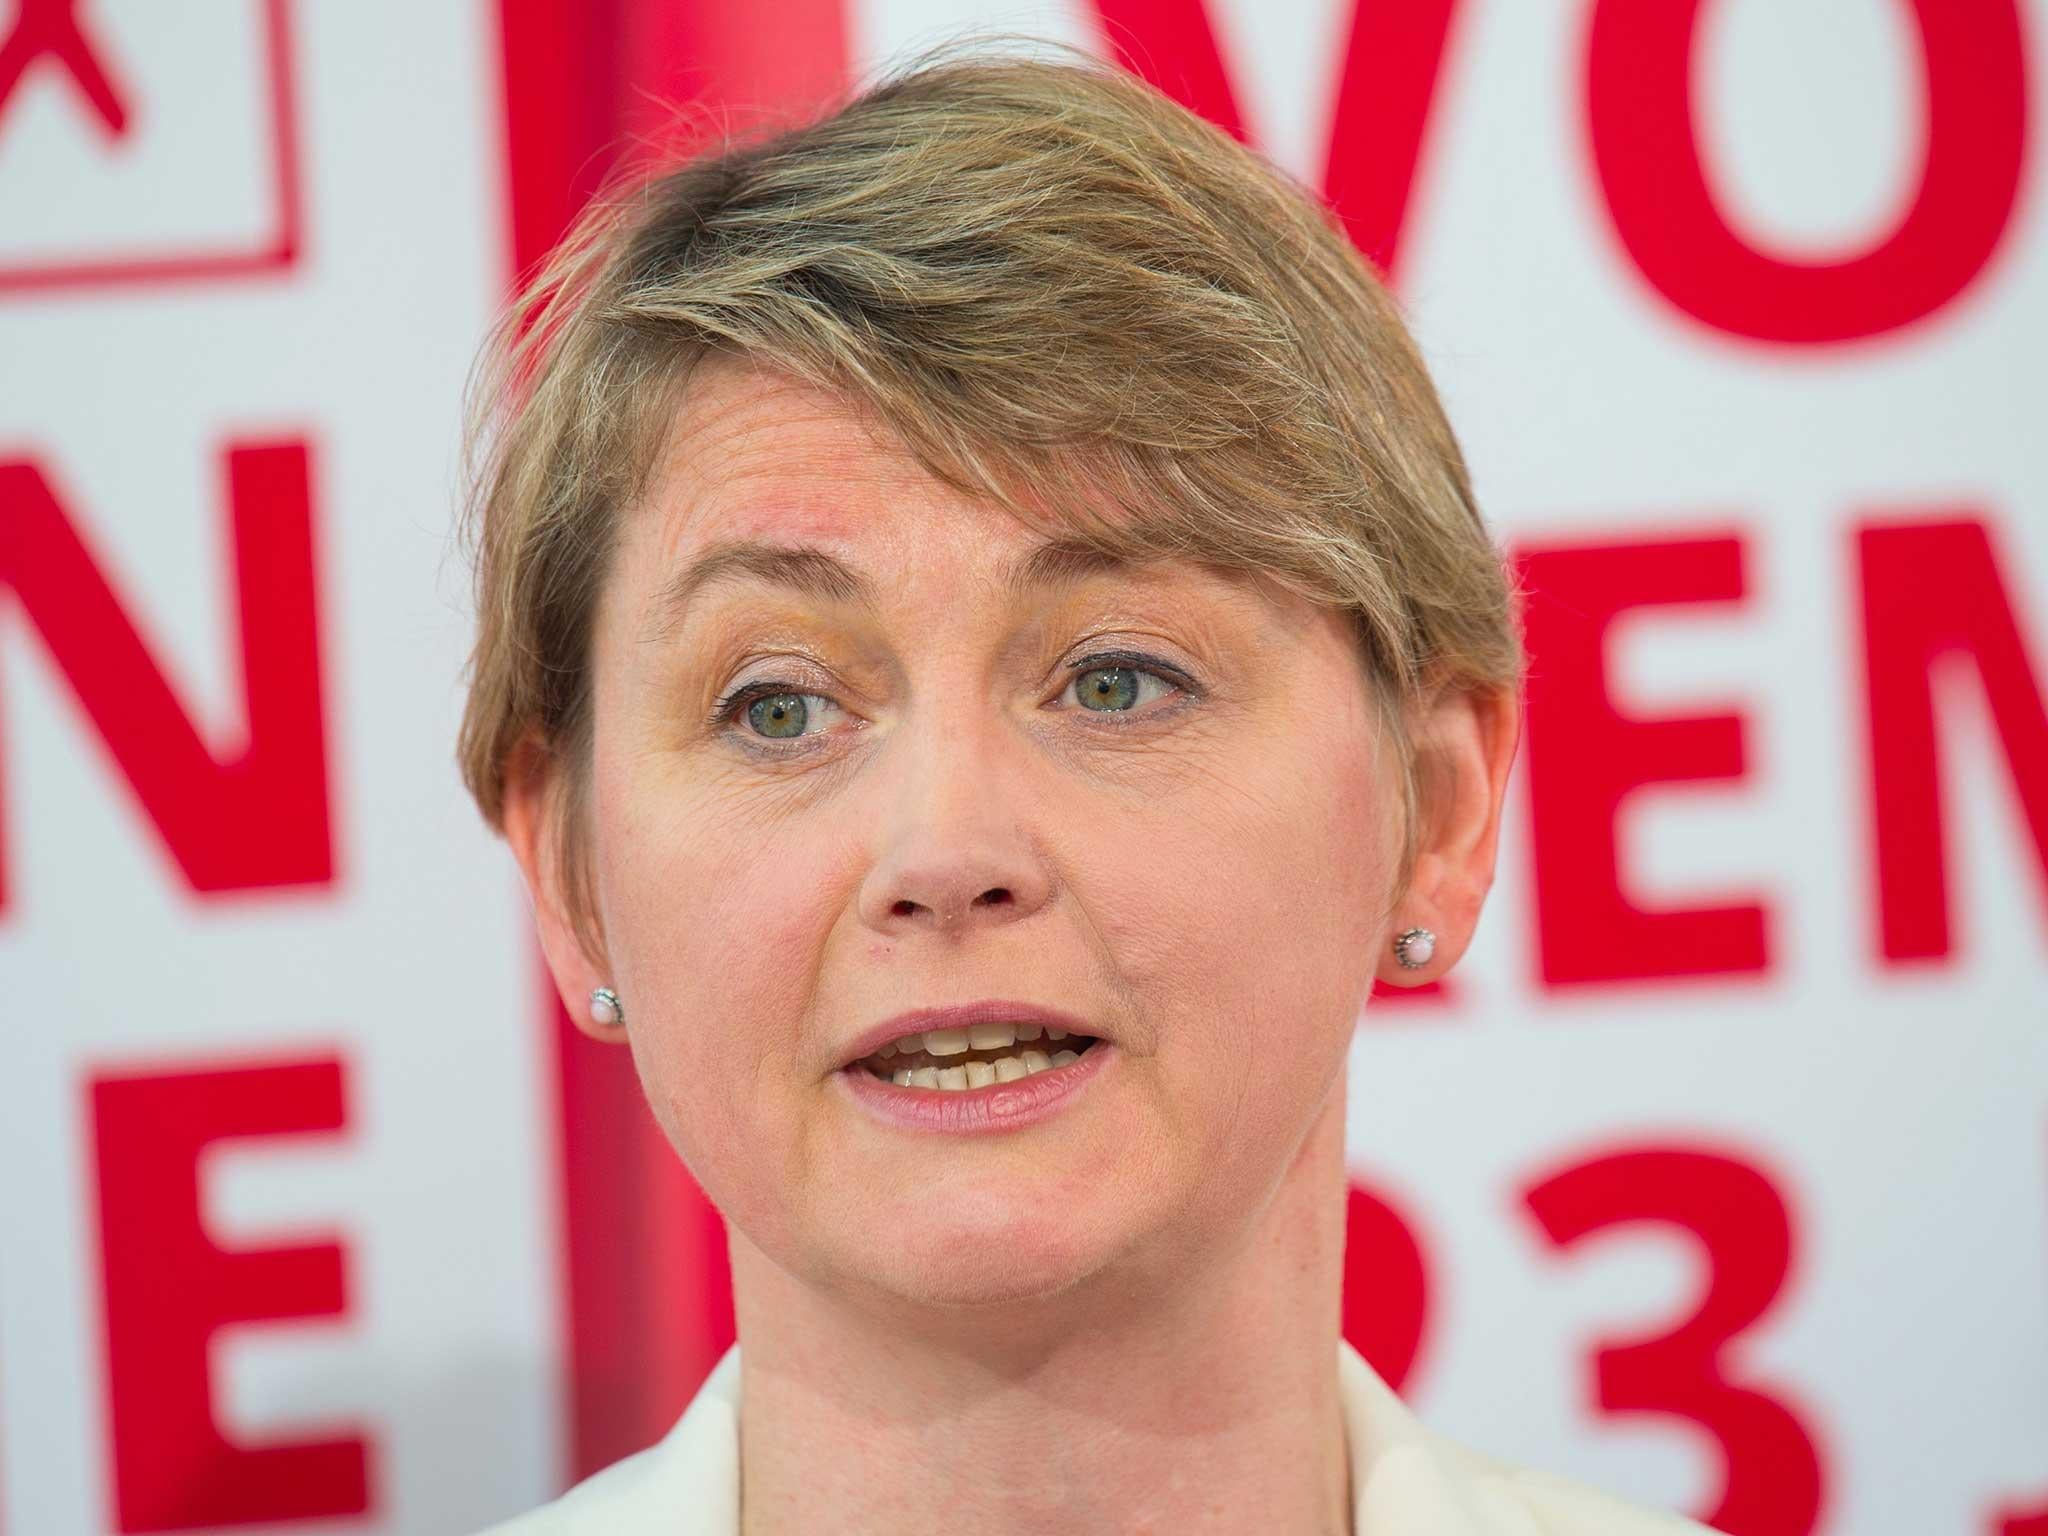 Yvette Cooper said Mr Corbyn should ‘insist on higher standards and proper enforcement’